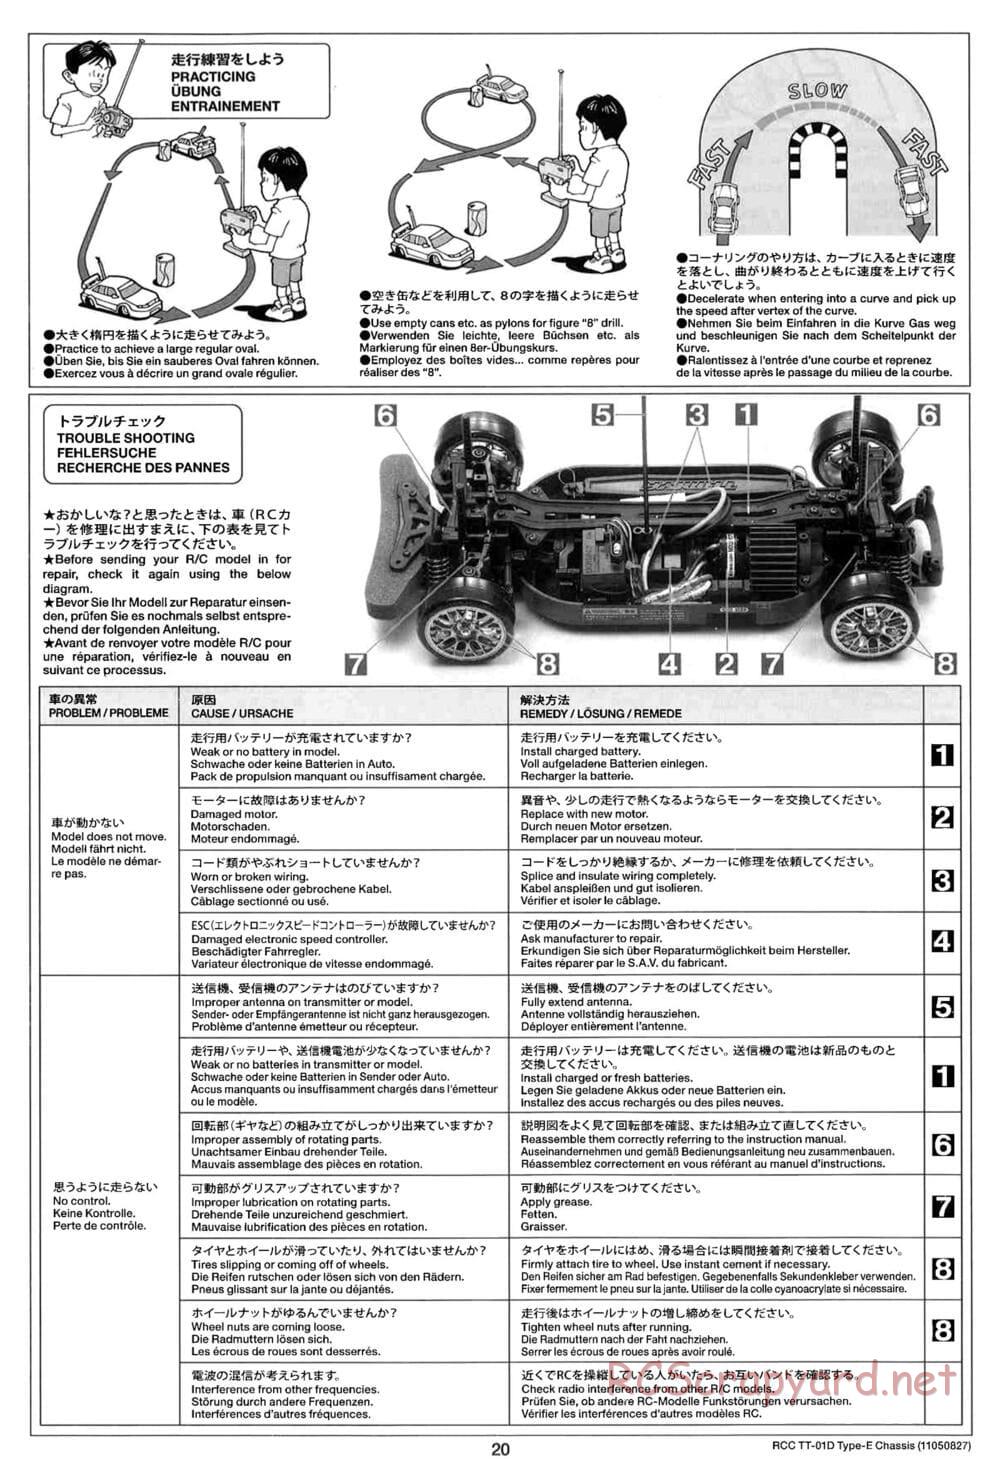 Tamiya - TT-01D Type-E (TT-01ED) - Drift Spec Chassis - Manual - Page 20